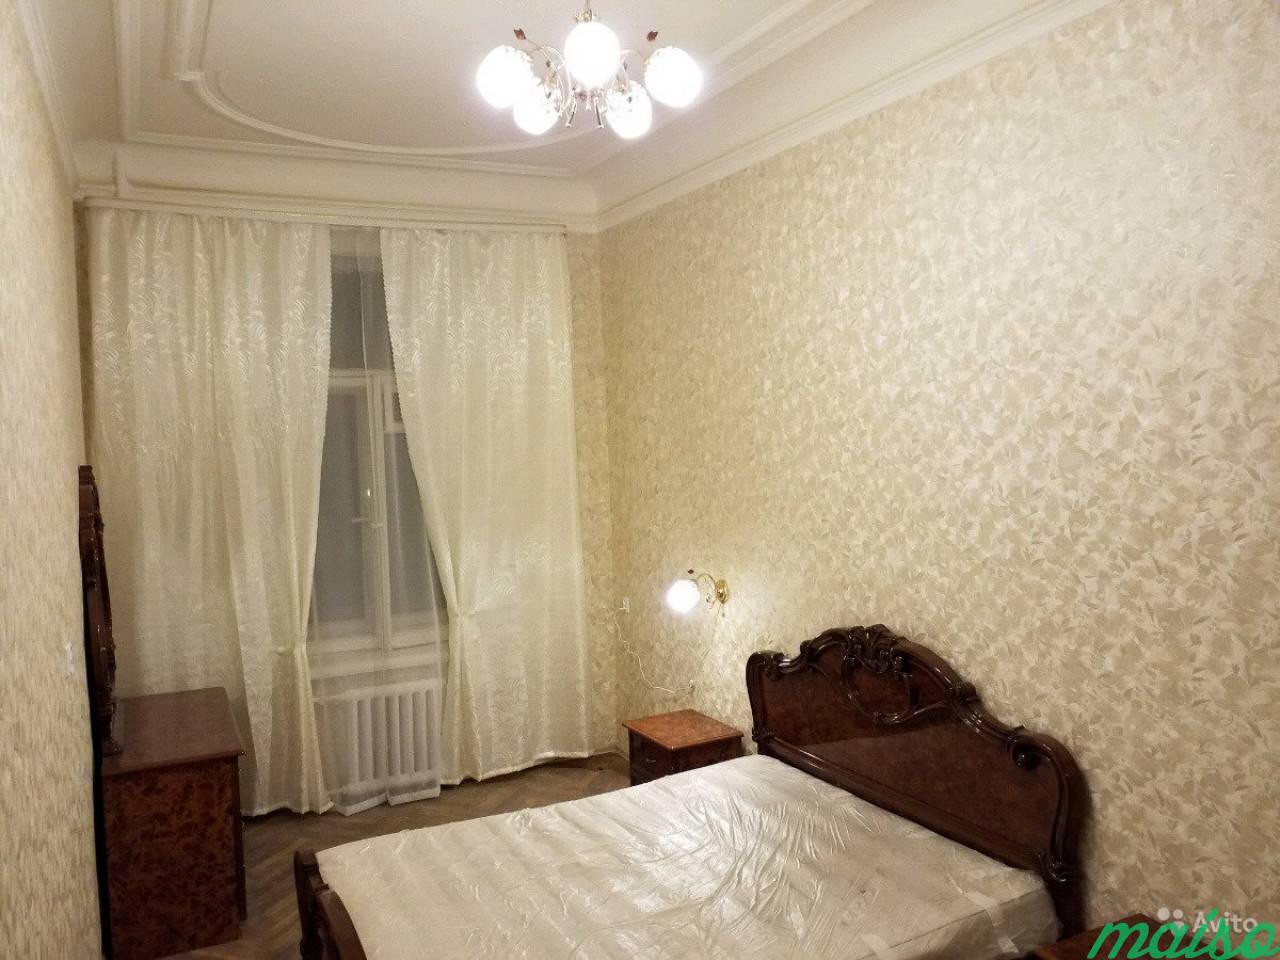 Комната 16 м² в 5-к, 3/5 эт. в Санкт-Петербурге. Фото 8